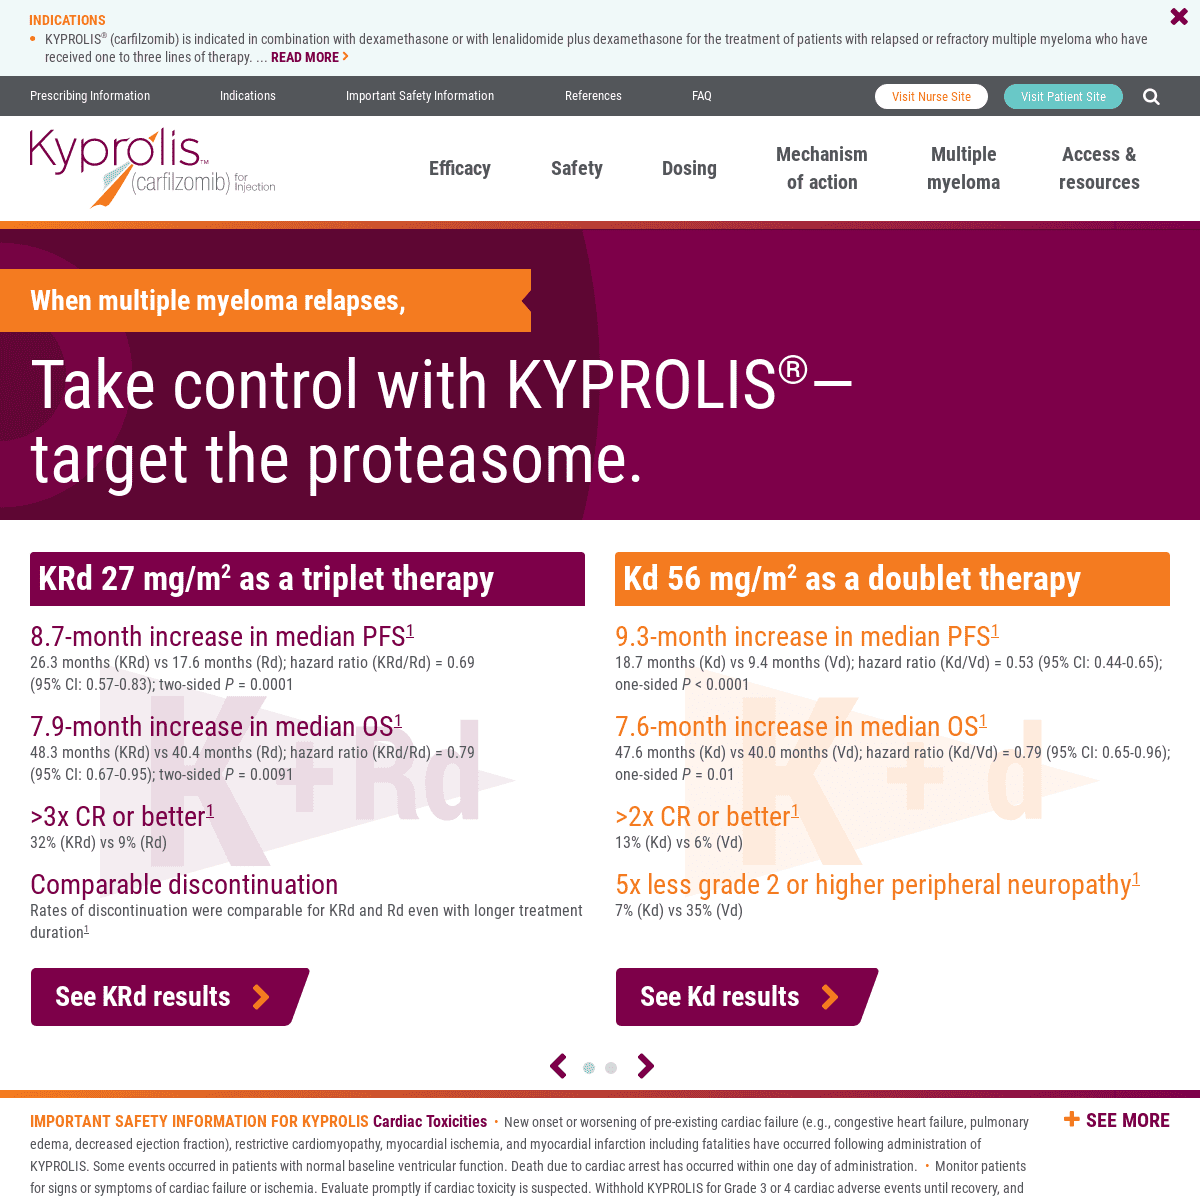 KYPROLIS® (carfilzomib) for Relapsed	or Refractory Multiple Myeloma